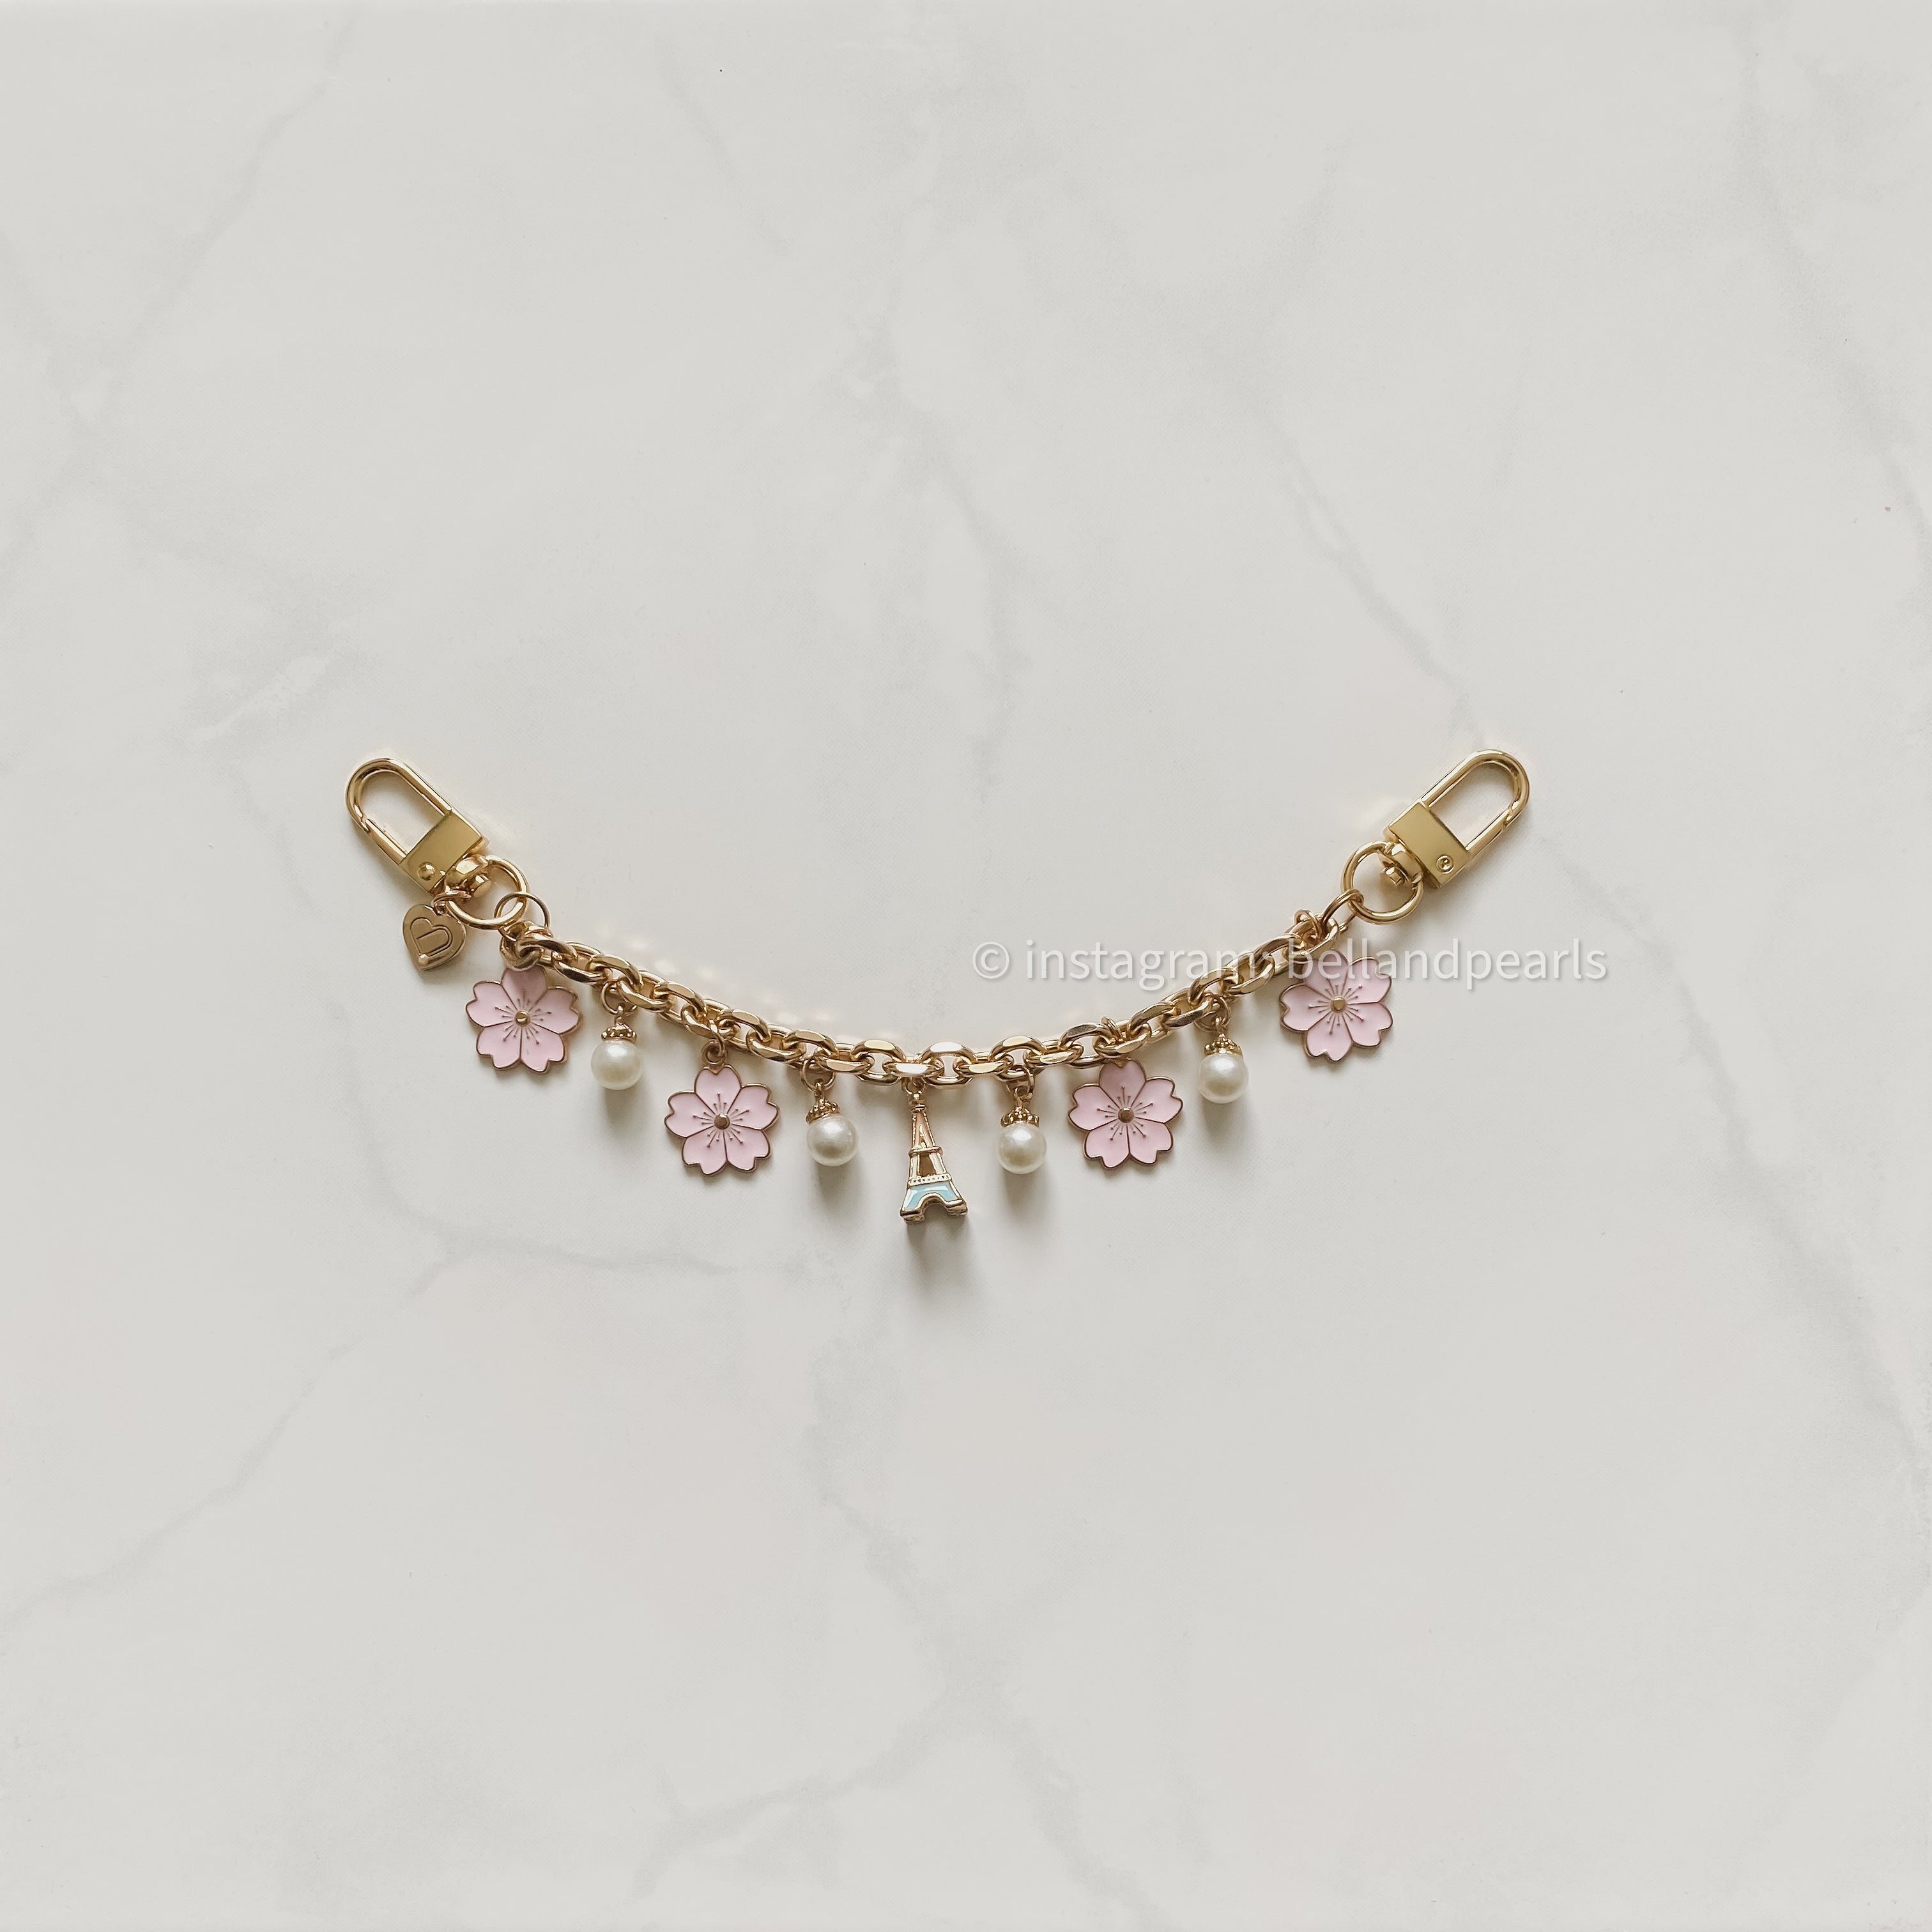 Key Ring Bracelet Louis Vuitton -  Israel